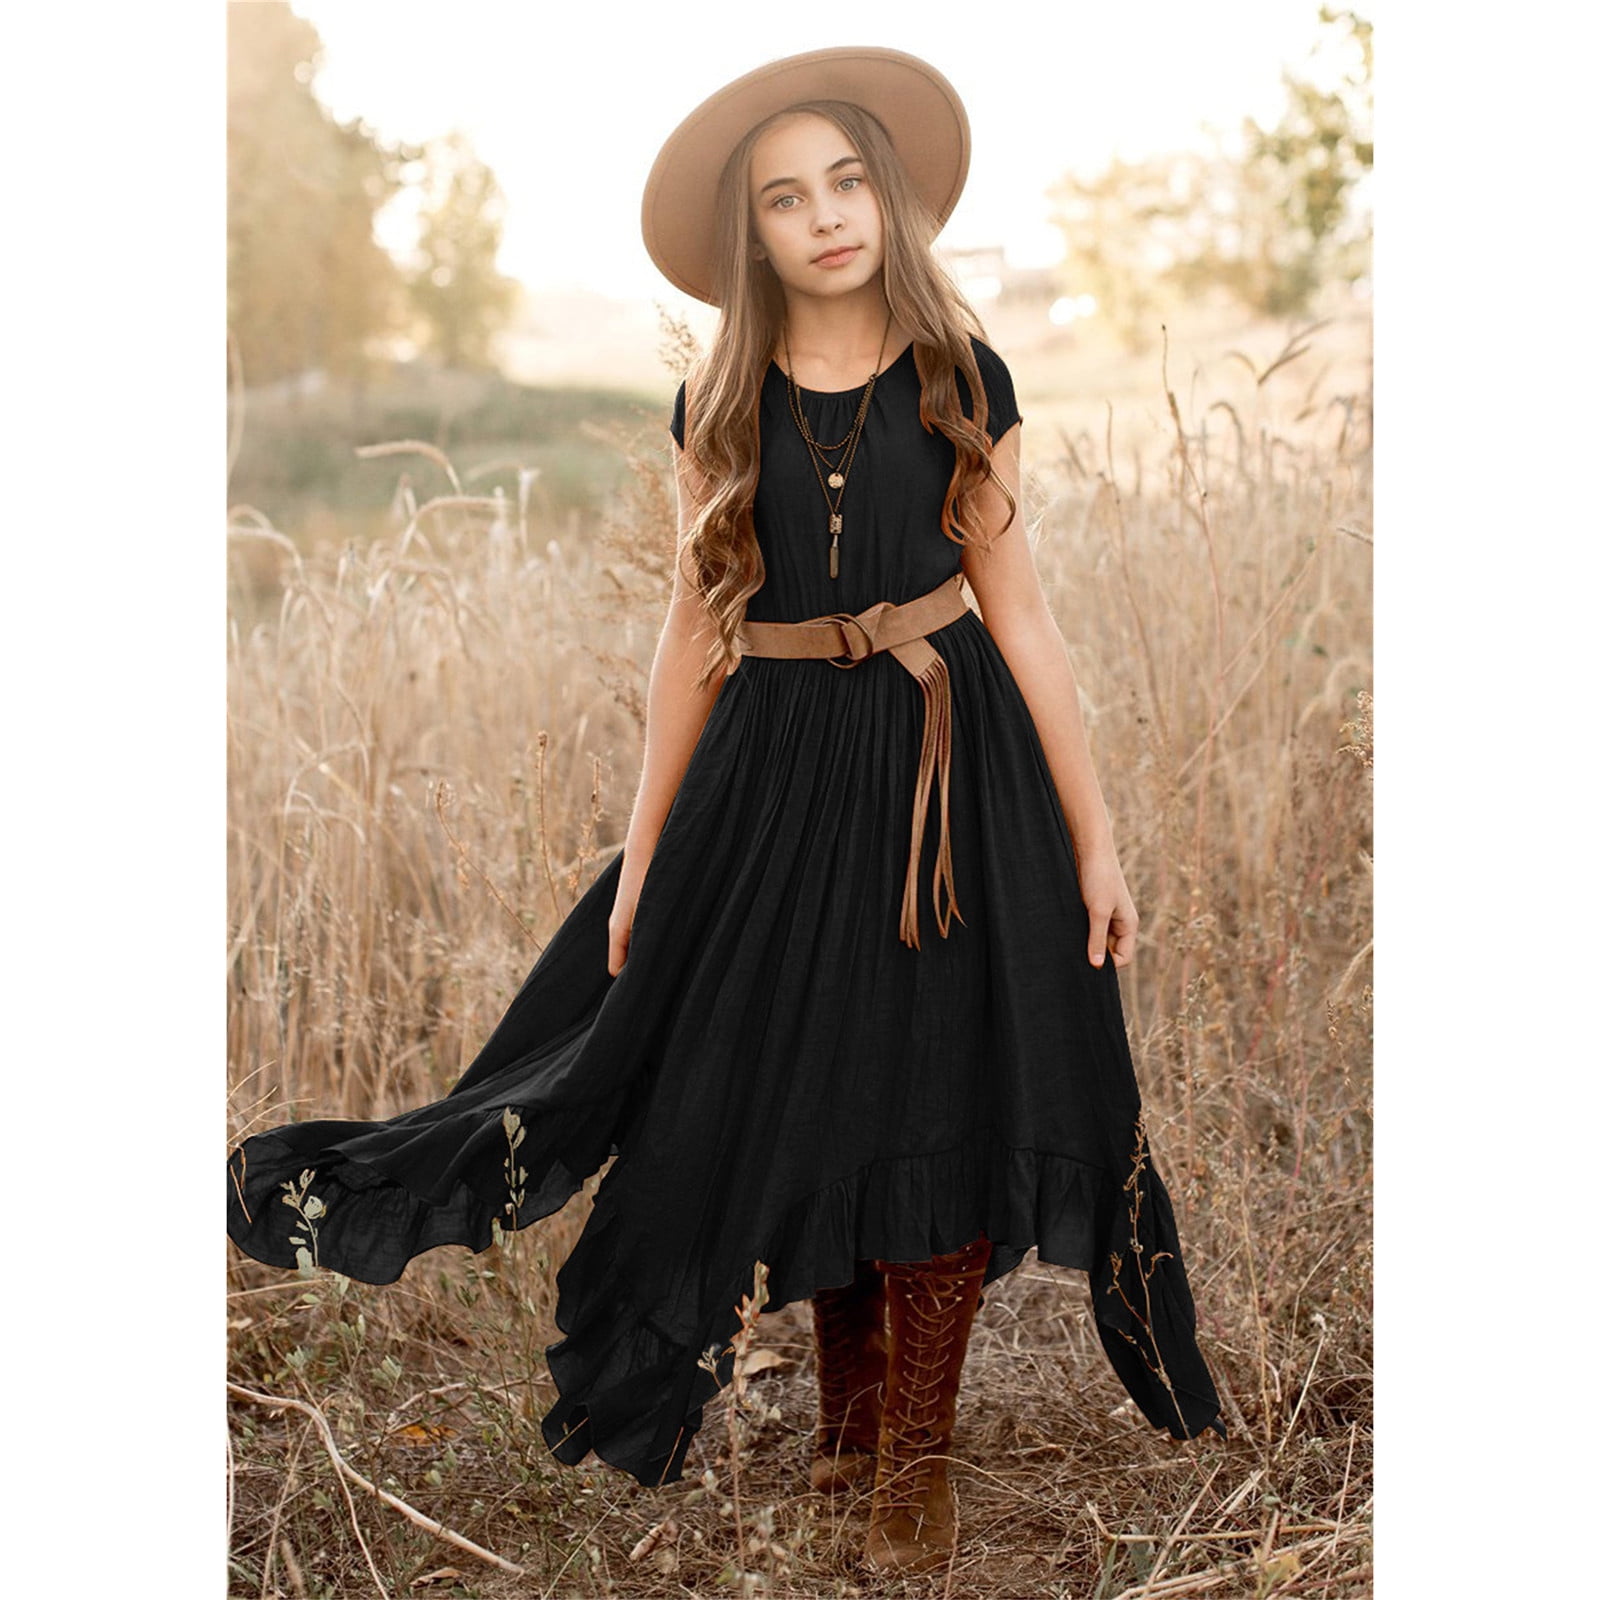 Buy PERFECTPIVOT Girl's Dresses Stylish Kids Frock Girl Dress Fancy Cloth -  Cotton Lycra - Dress Kid (9-10 Years, Black) at Amazon.in